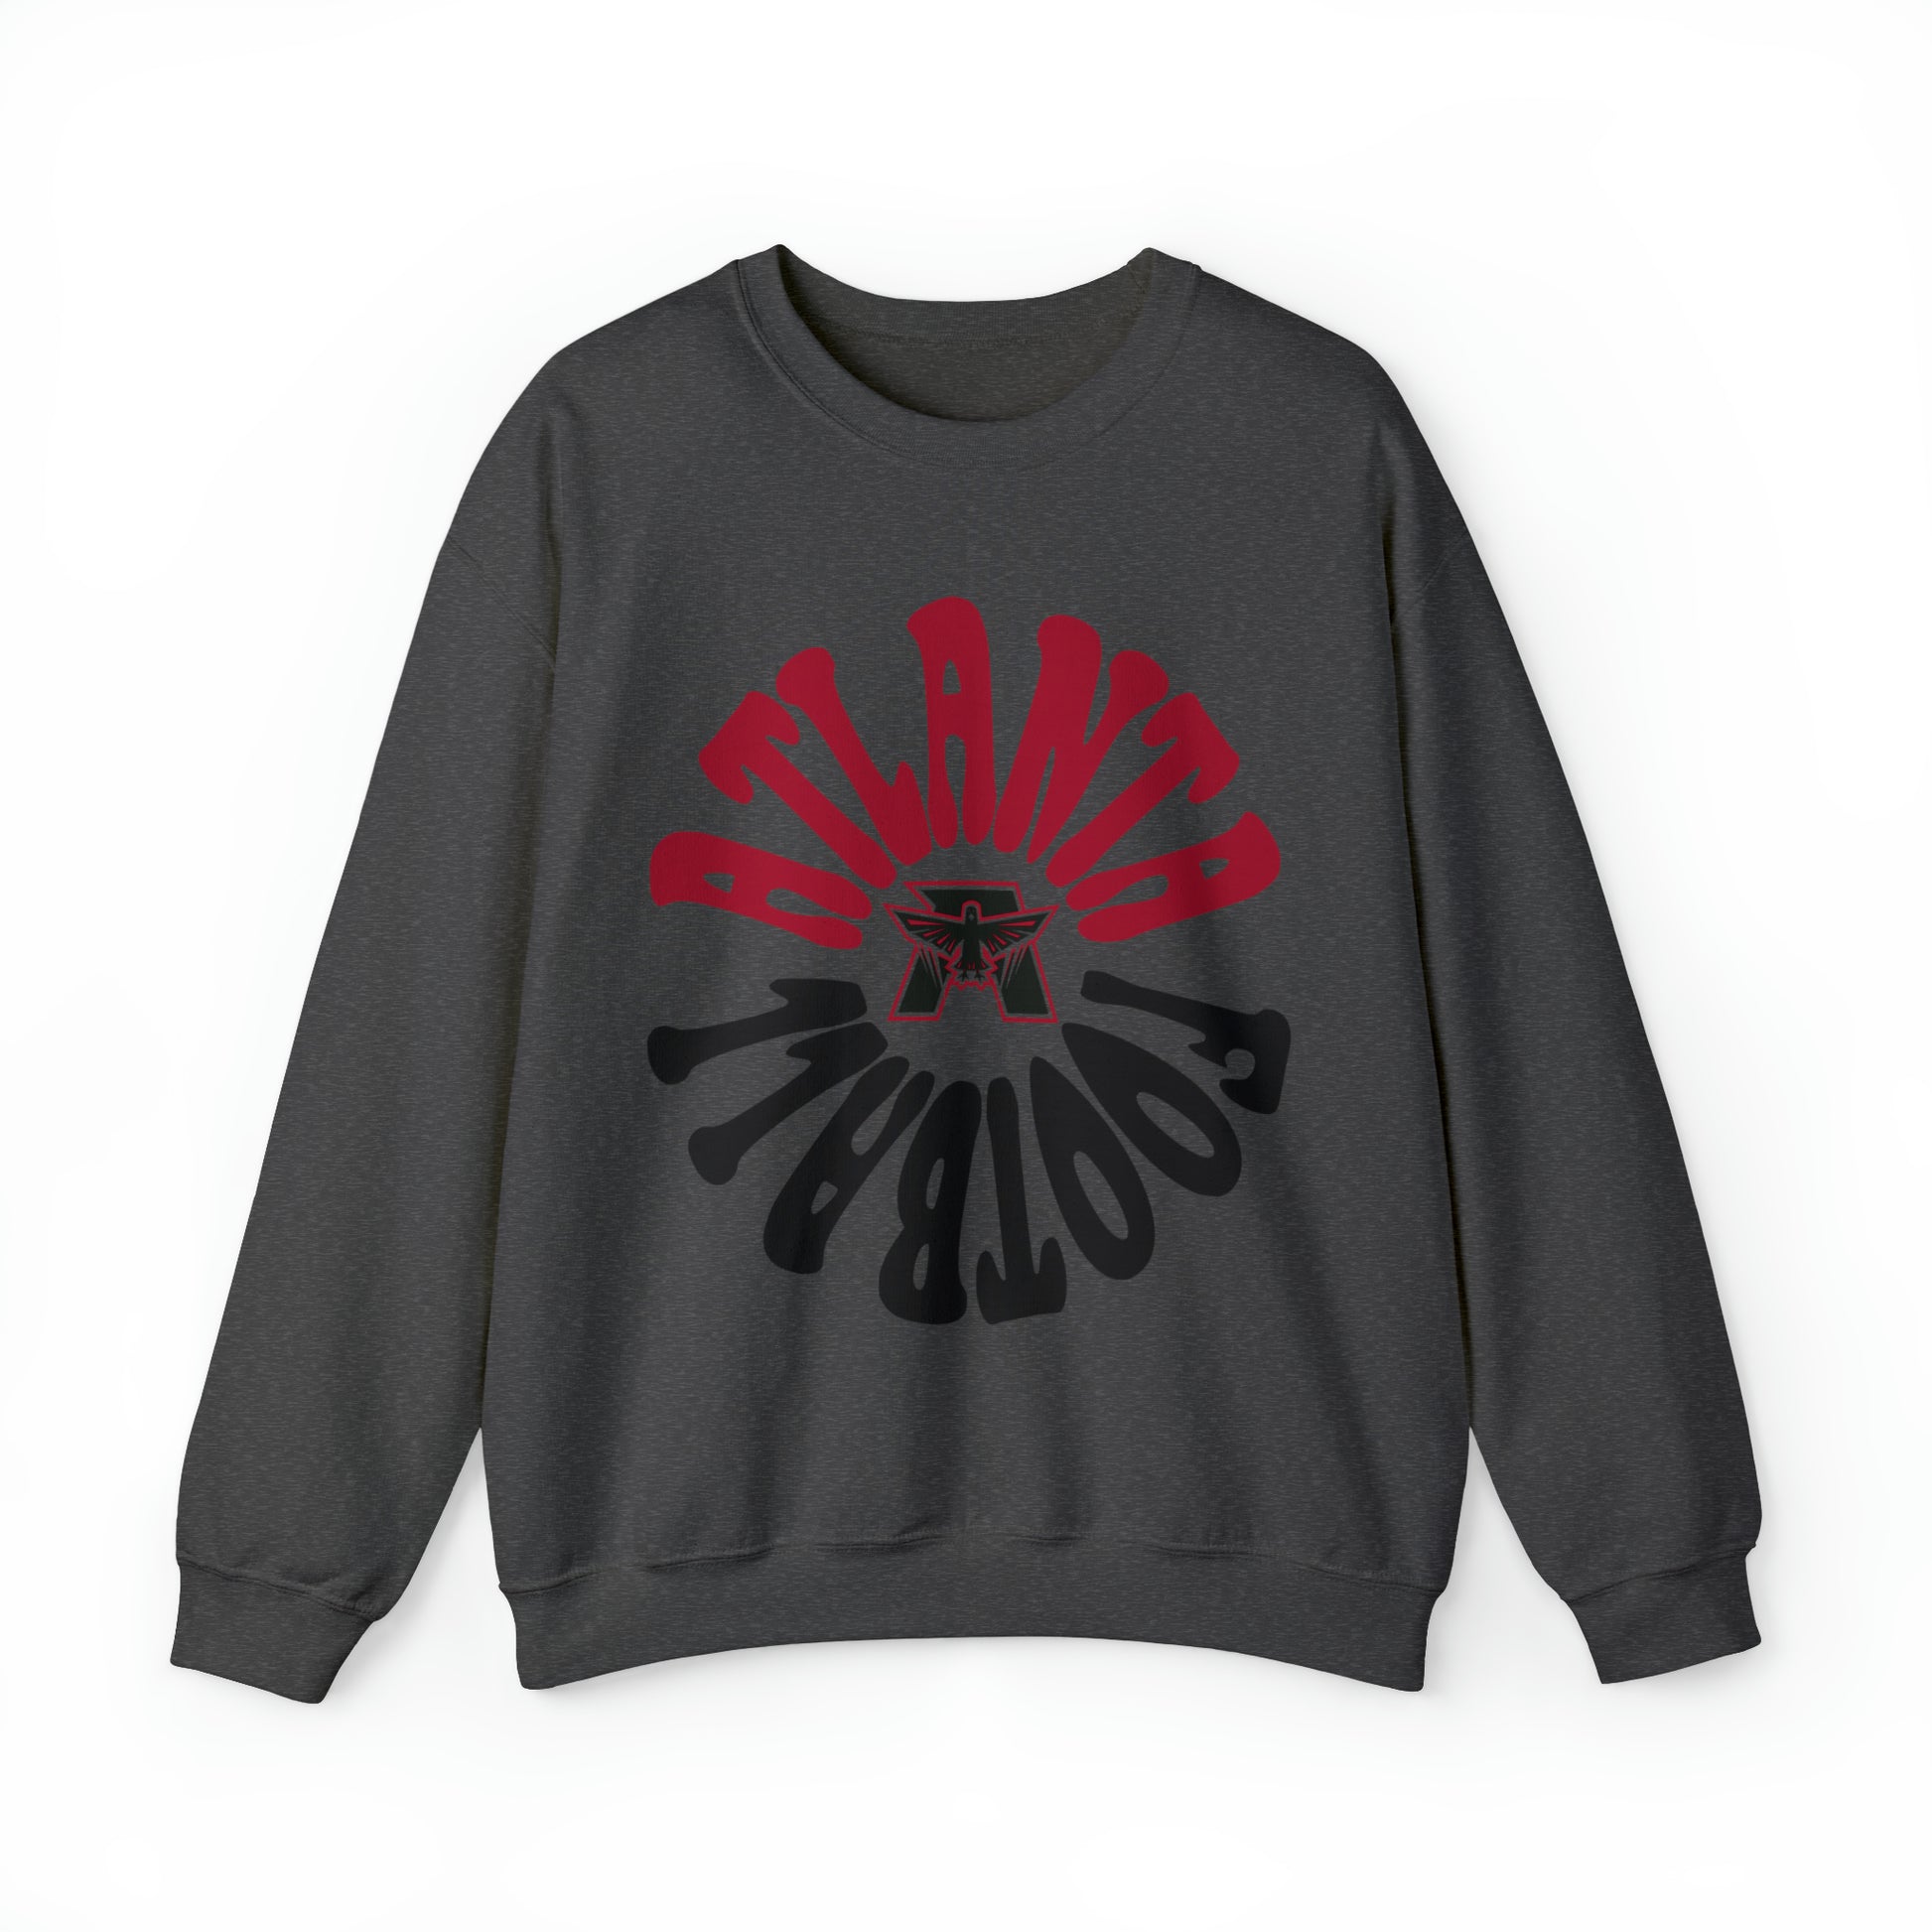 Hippy Retro Atlanta Falcons Crewneck - Vintage Unisex Football Sweatshirt - Men's & Women's - Design 2